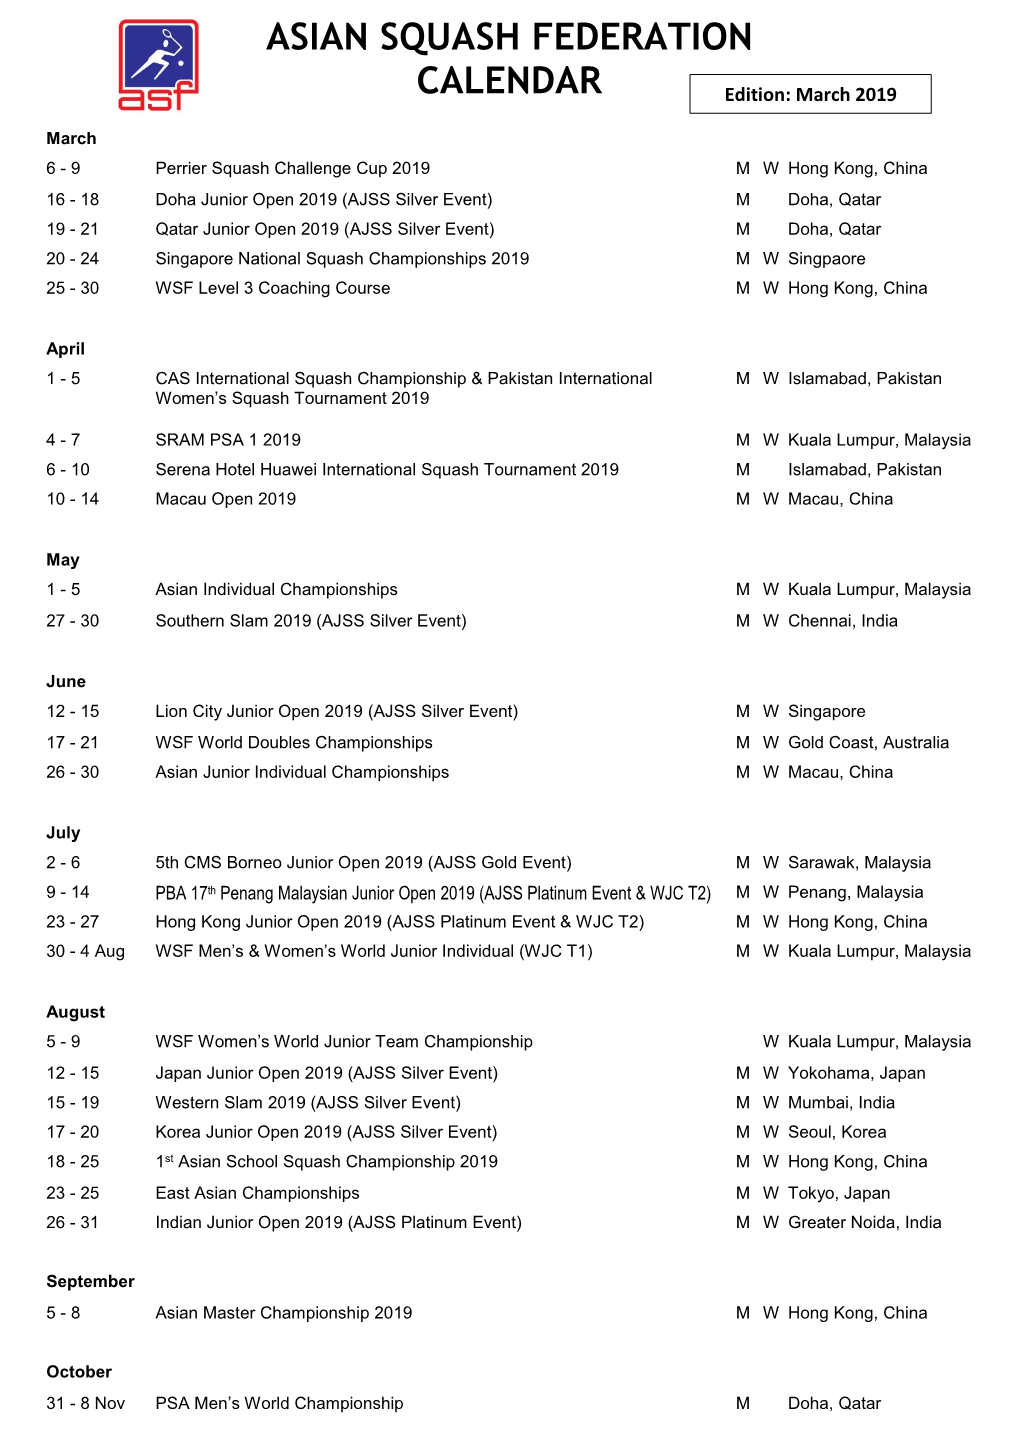 Asian Squash Federation Calendar